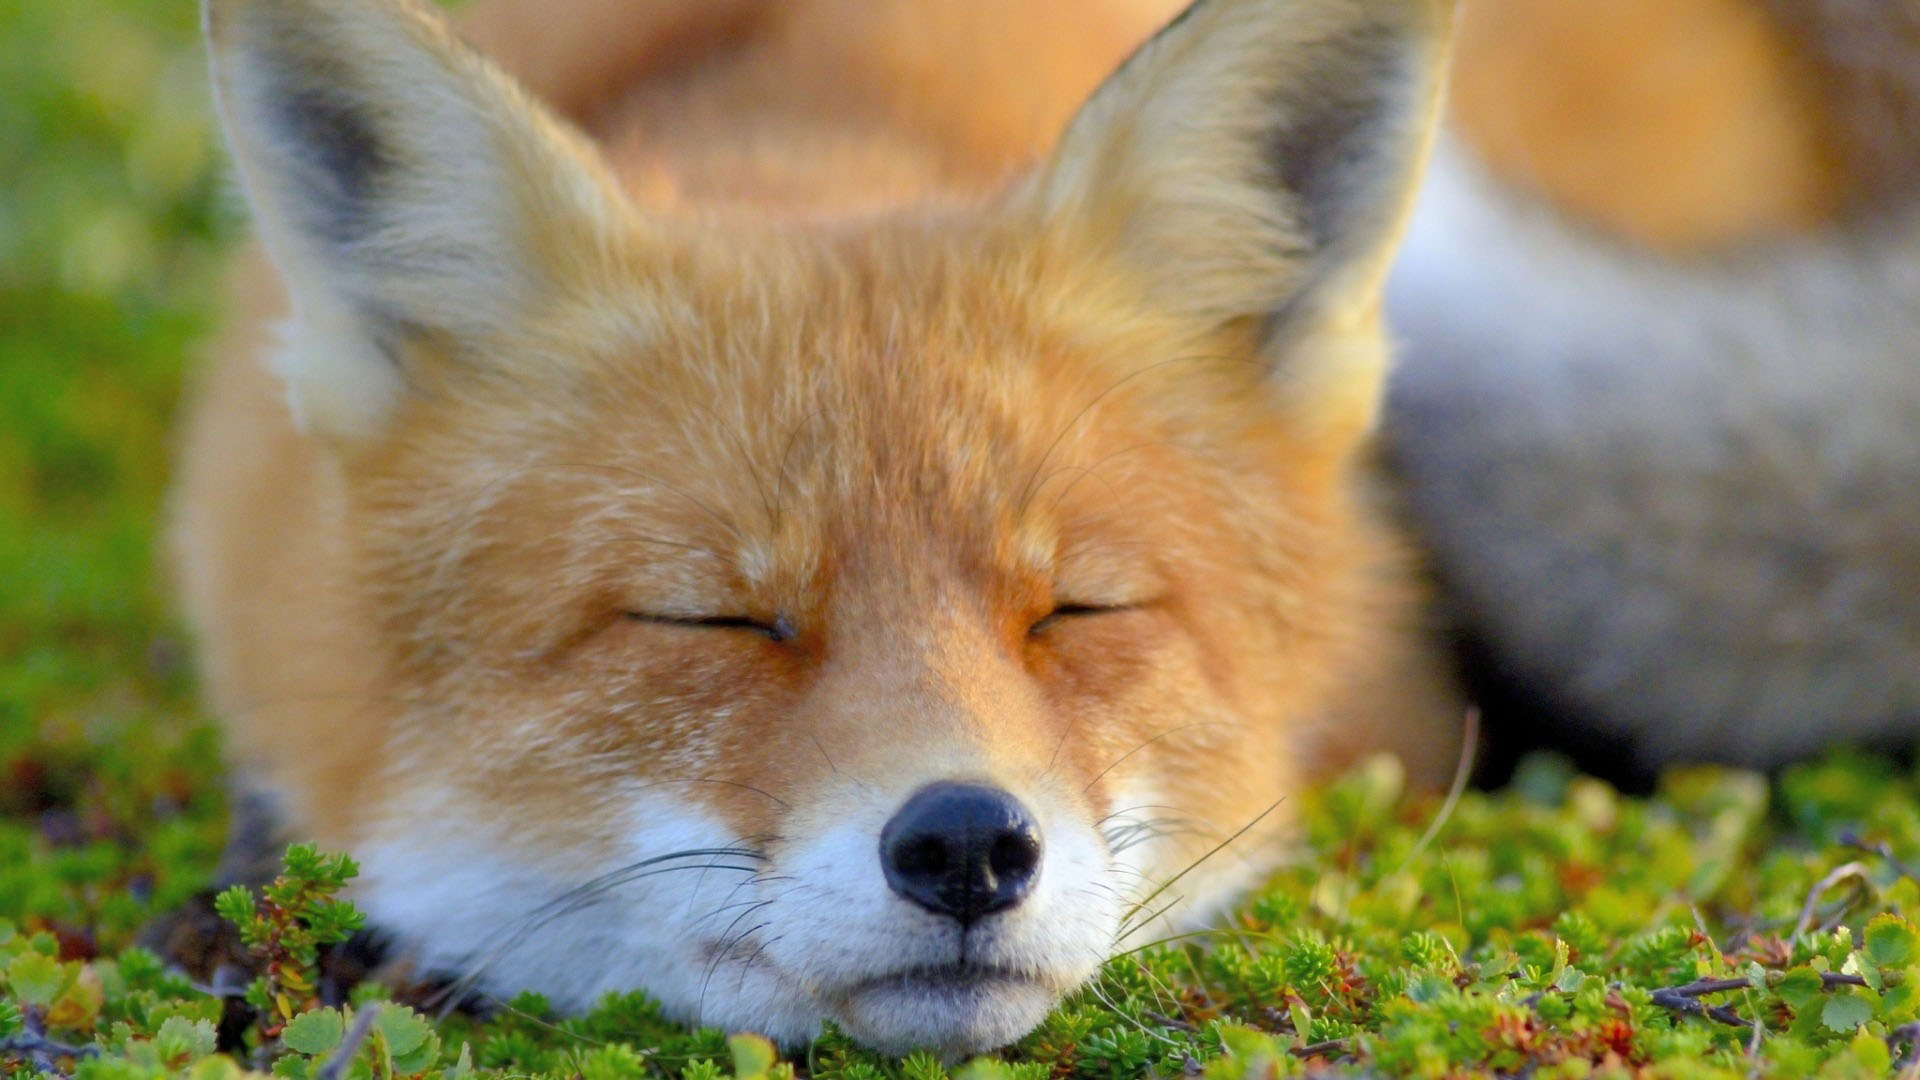 红狐 动物 动物园 - Pixabay上的免费照片 - Pixabay